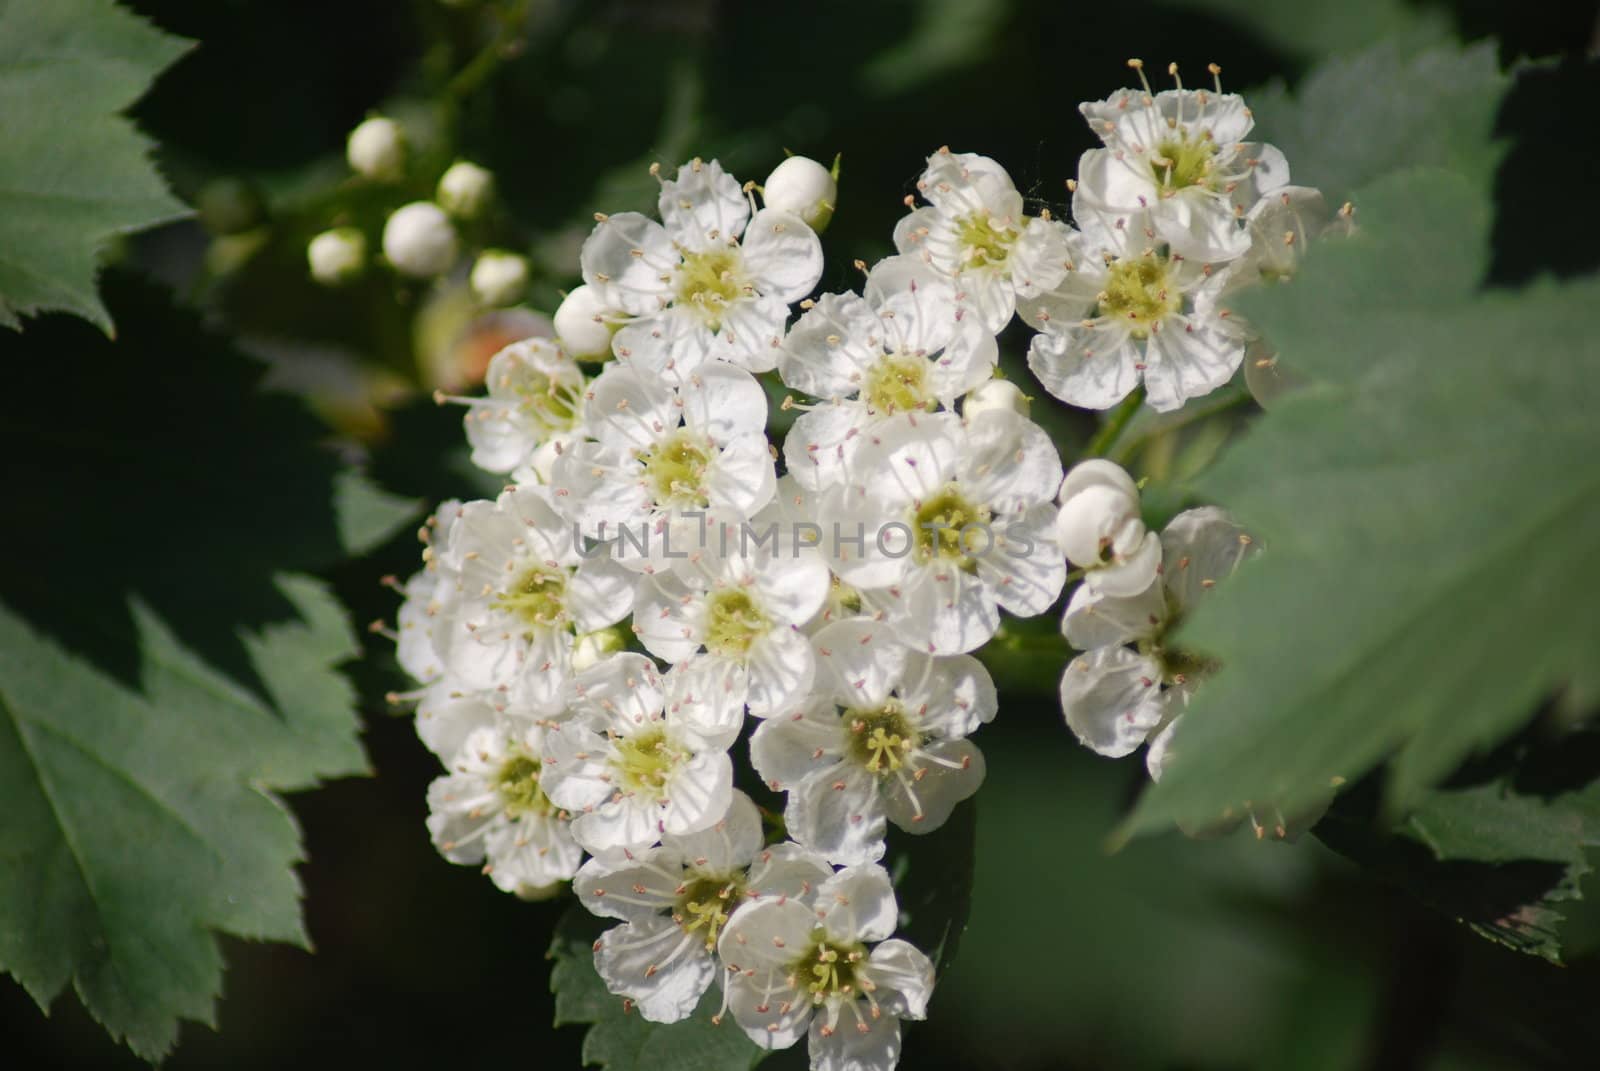 apple blossom close-up - white flowers by svtrotof